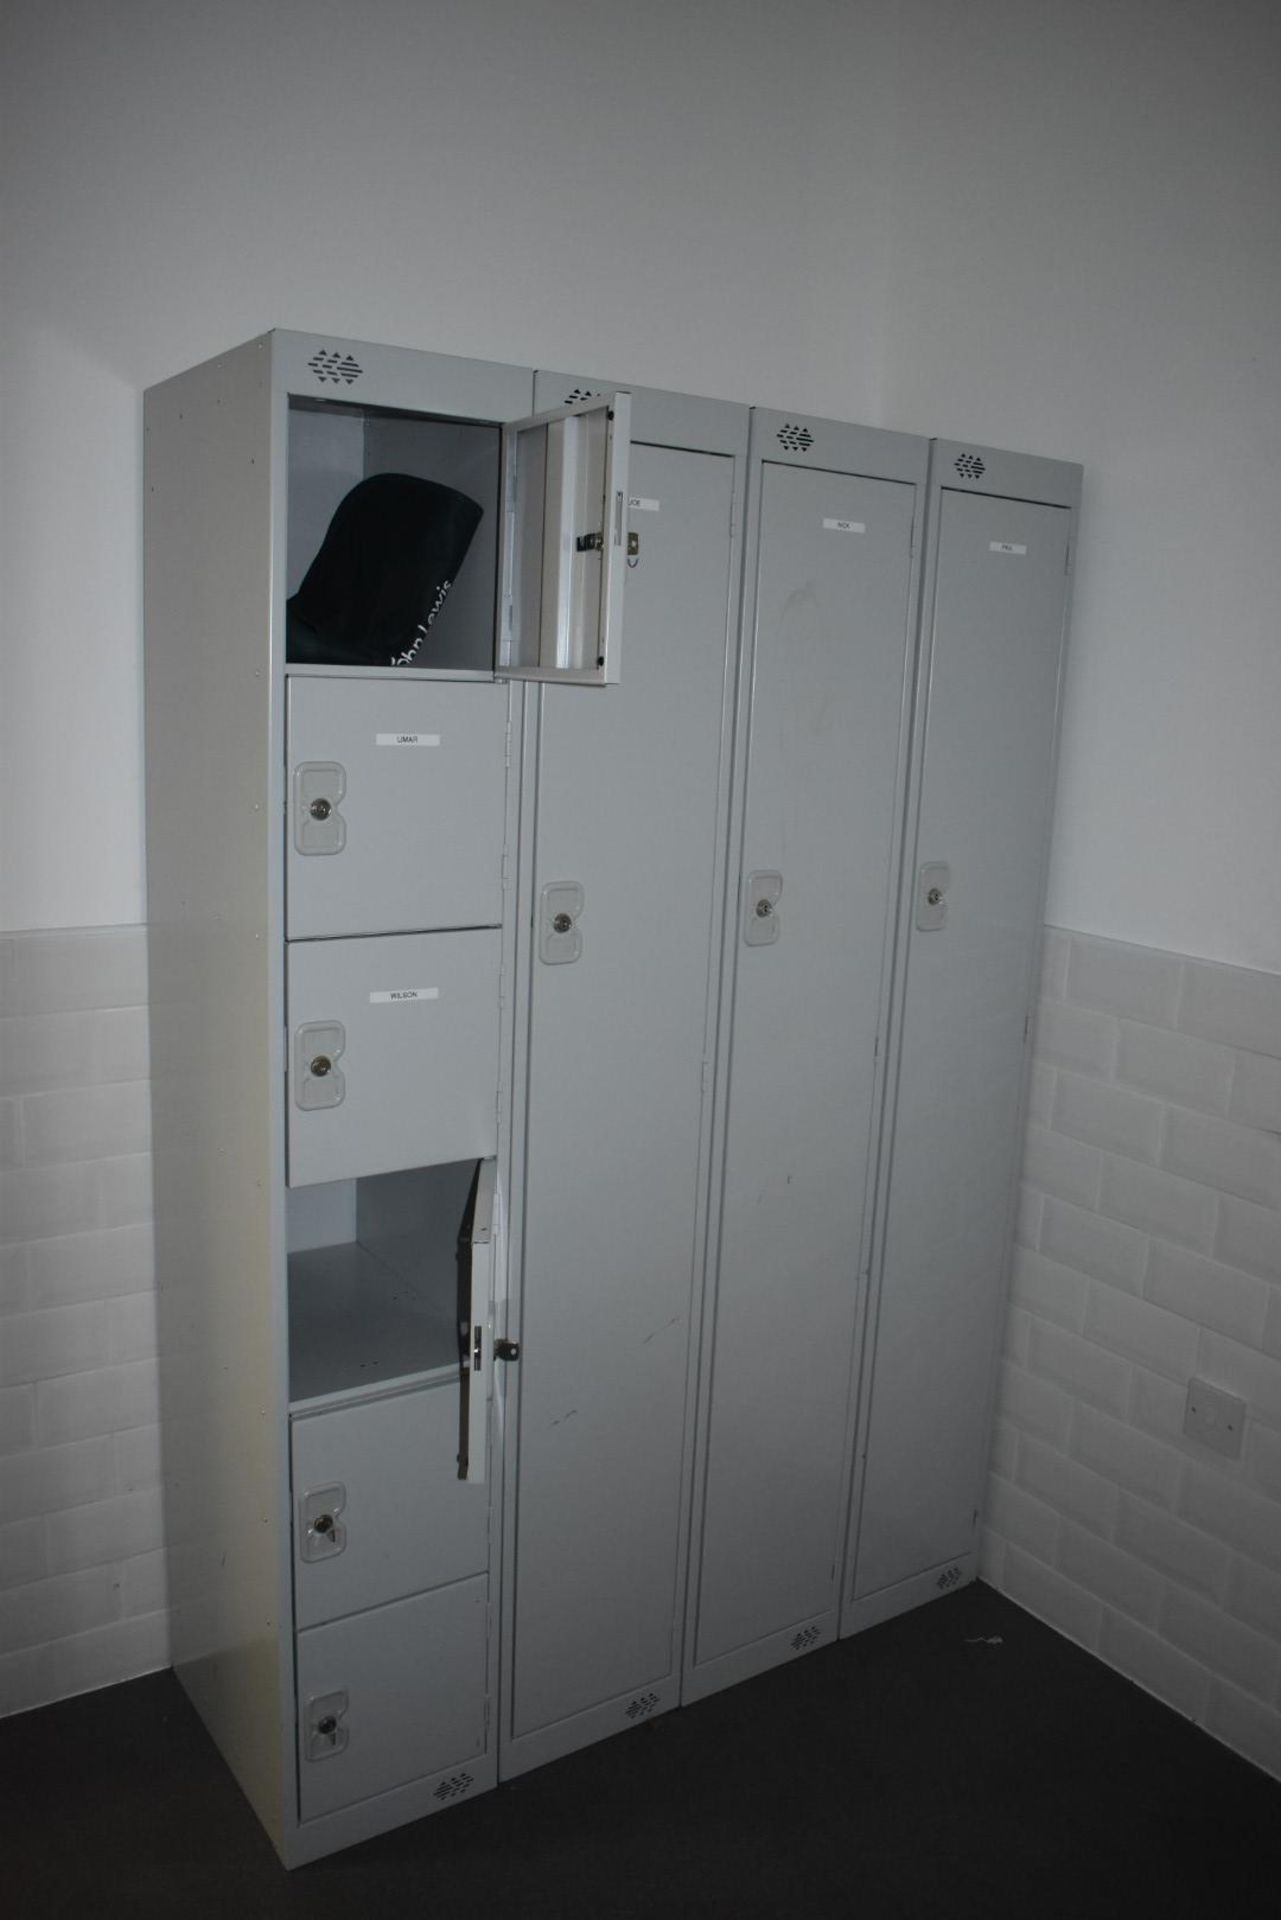 1 x Set of Staff Lockers - CL489 - Location: Putney, London, SW15 - Image 2 of 2